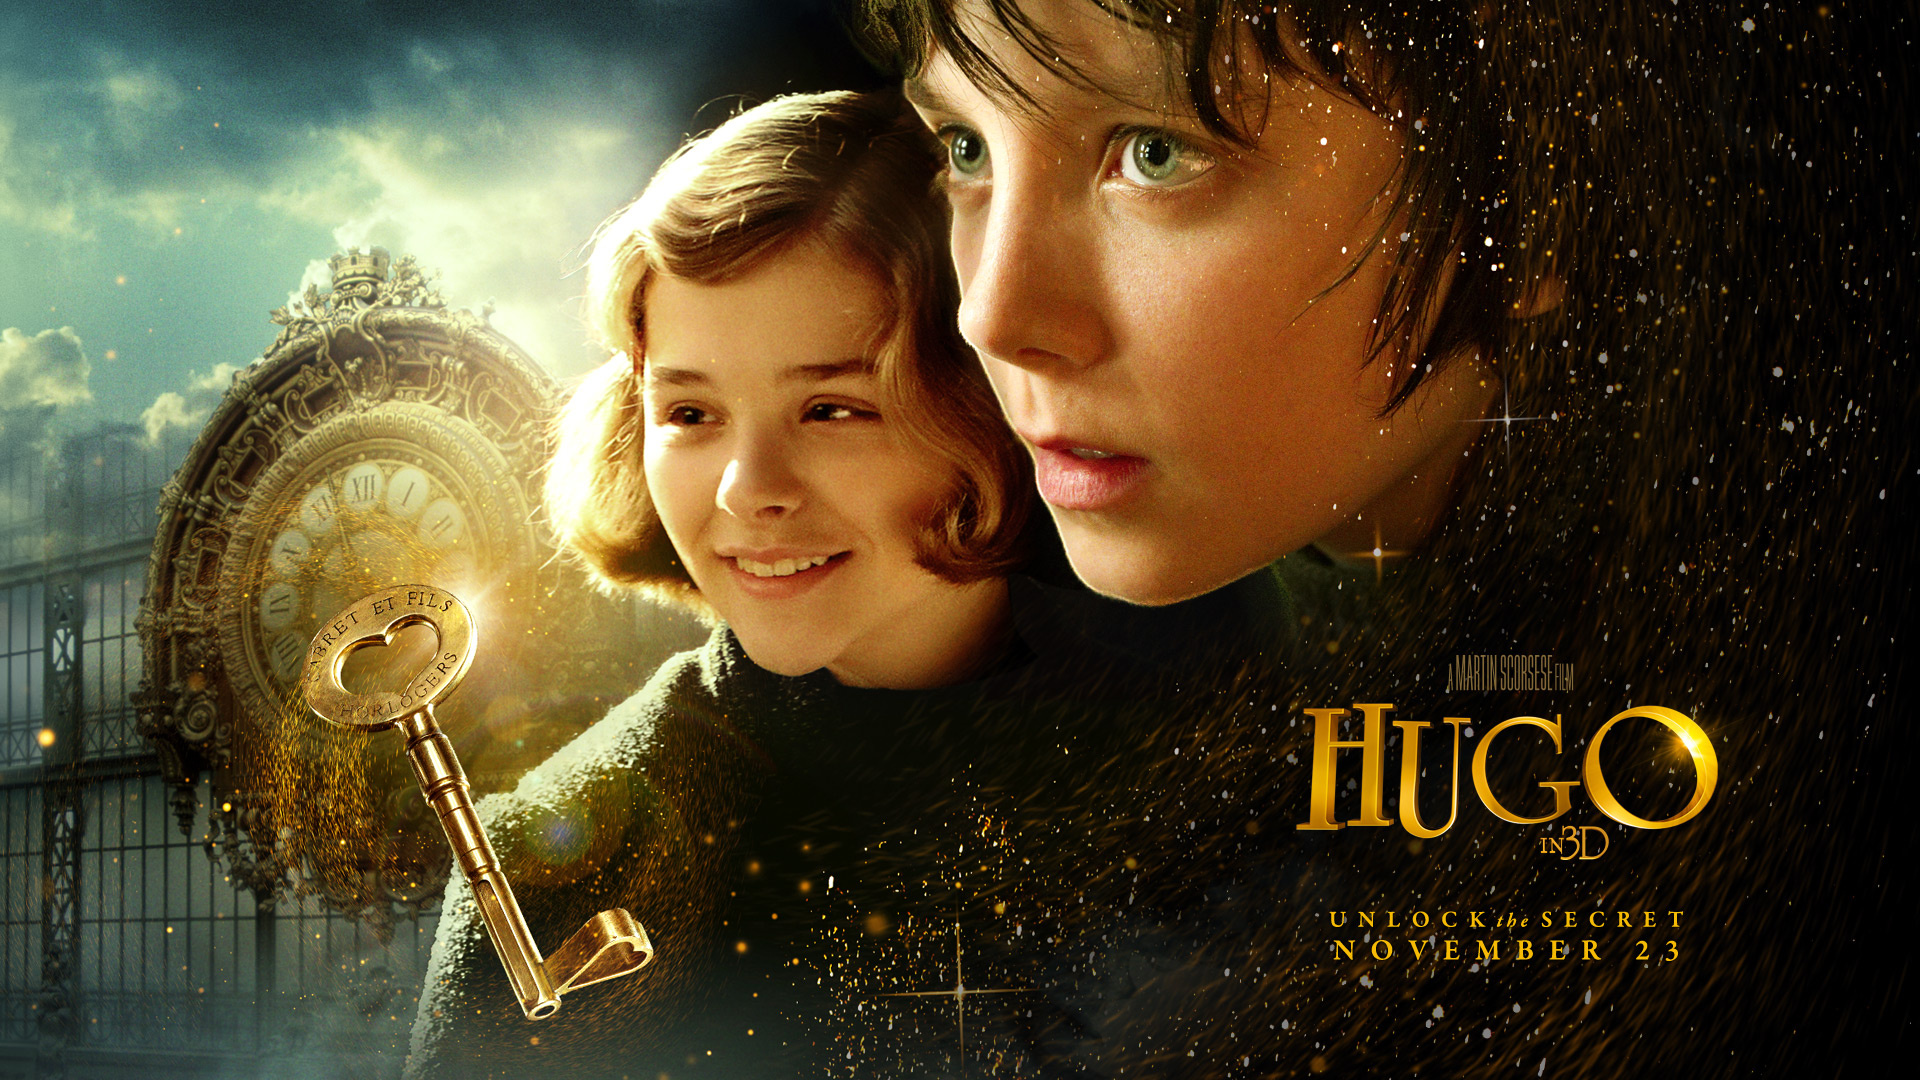 Hugo, HD wallpaper, Movie background image, 1920x1080 Full HD Desktop